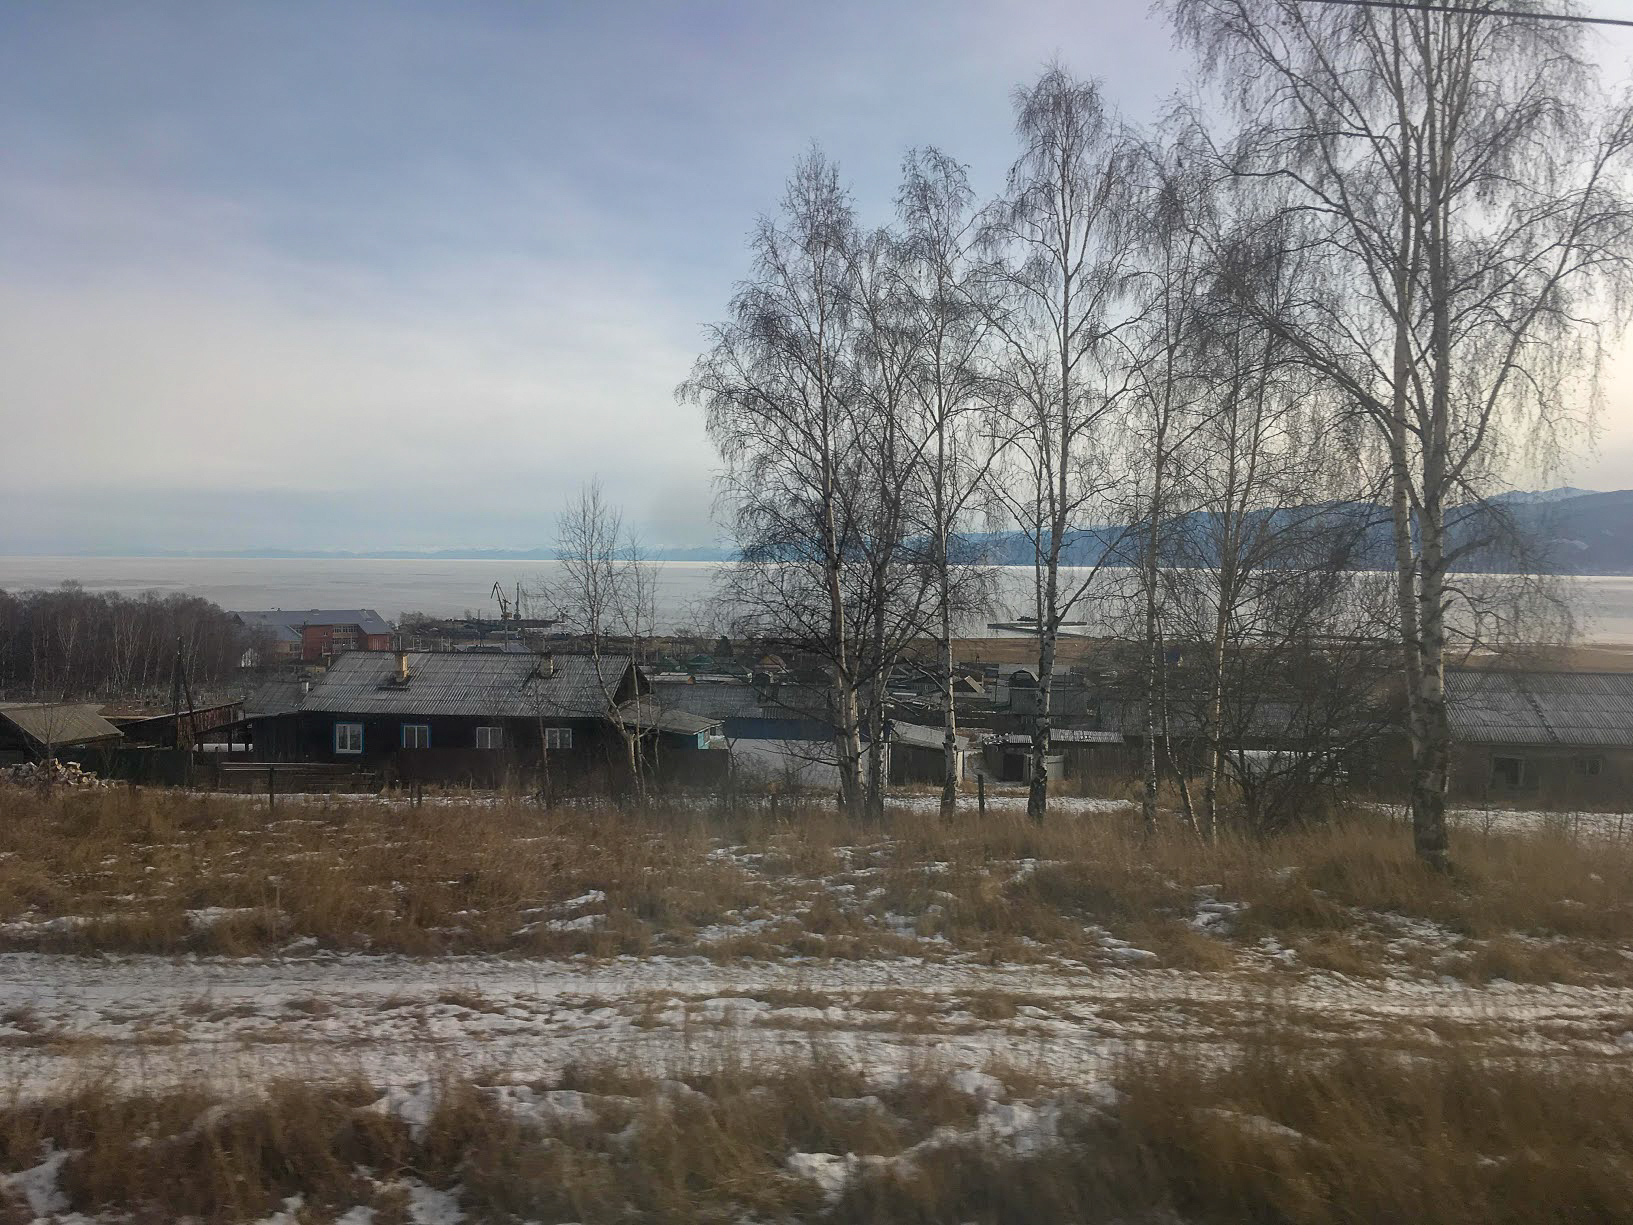 Lake Baikal seen from the Ulan Ude to Irkutsk Trans-Siberian Train